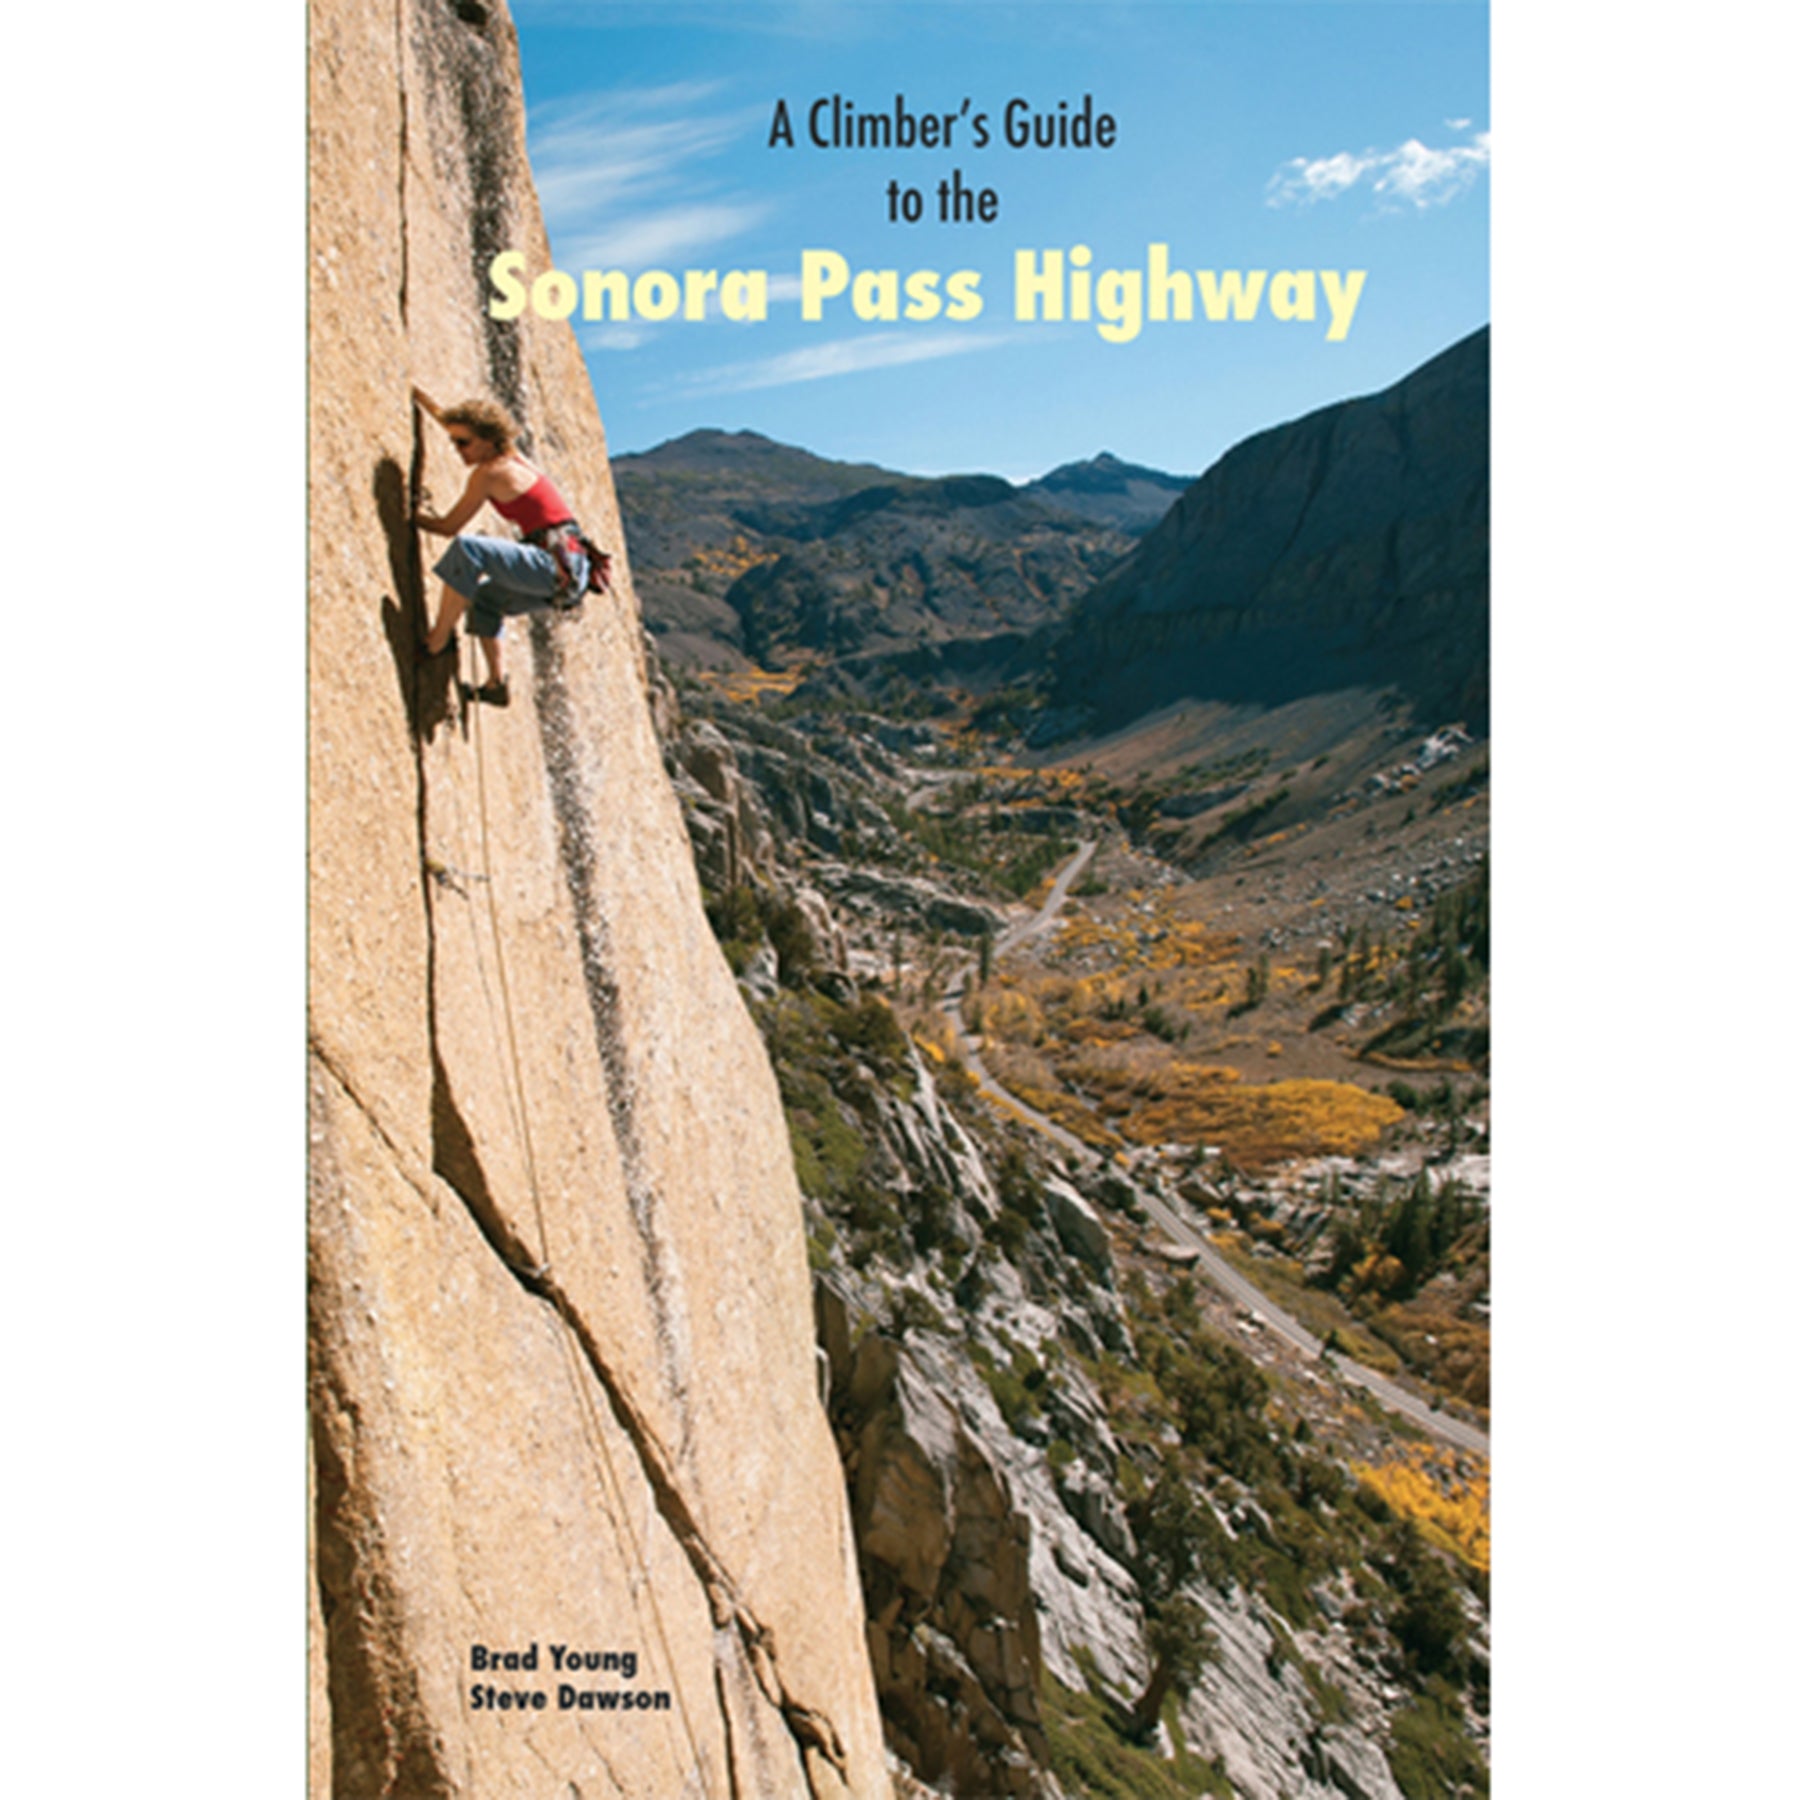 Climbing Guidebooks - Eastside Sports